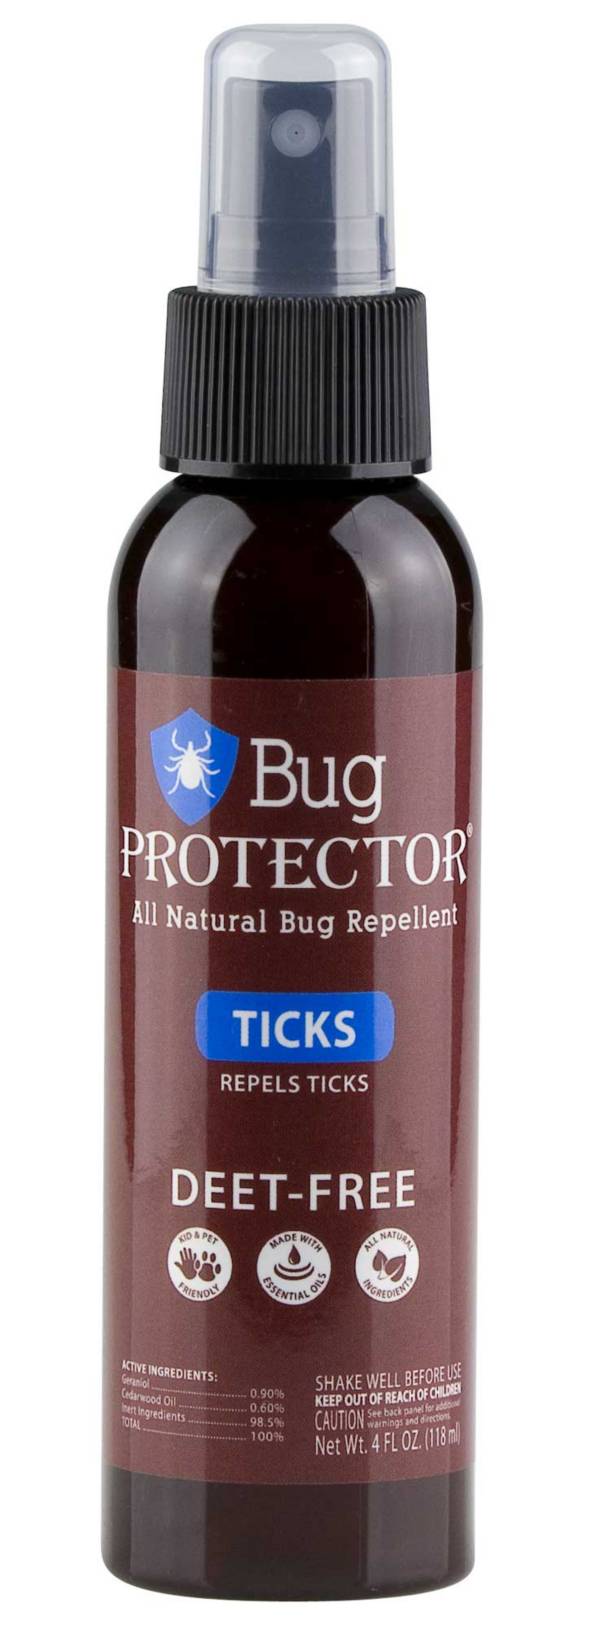 Bug Protector Tick 4oz. Repellant Spray product image